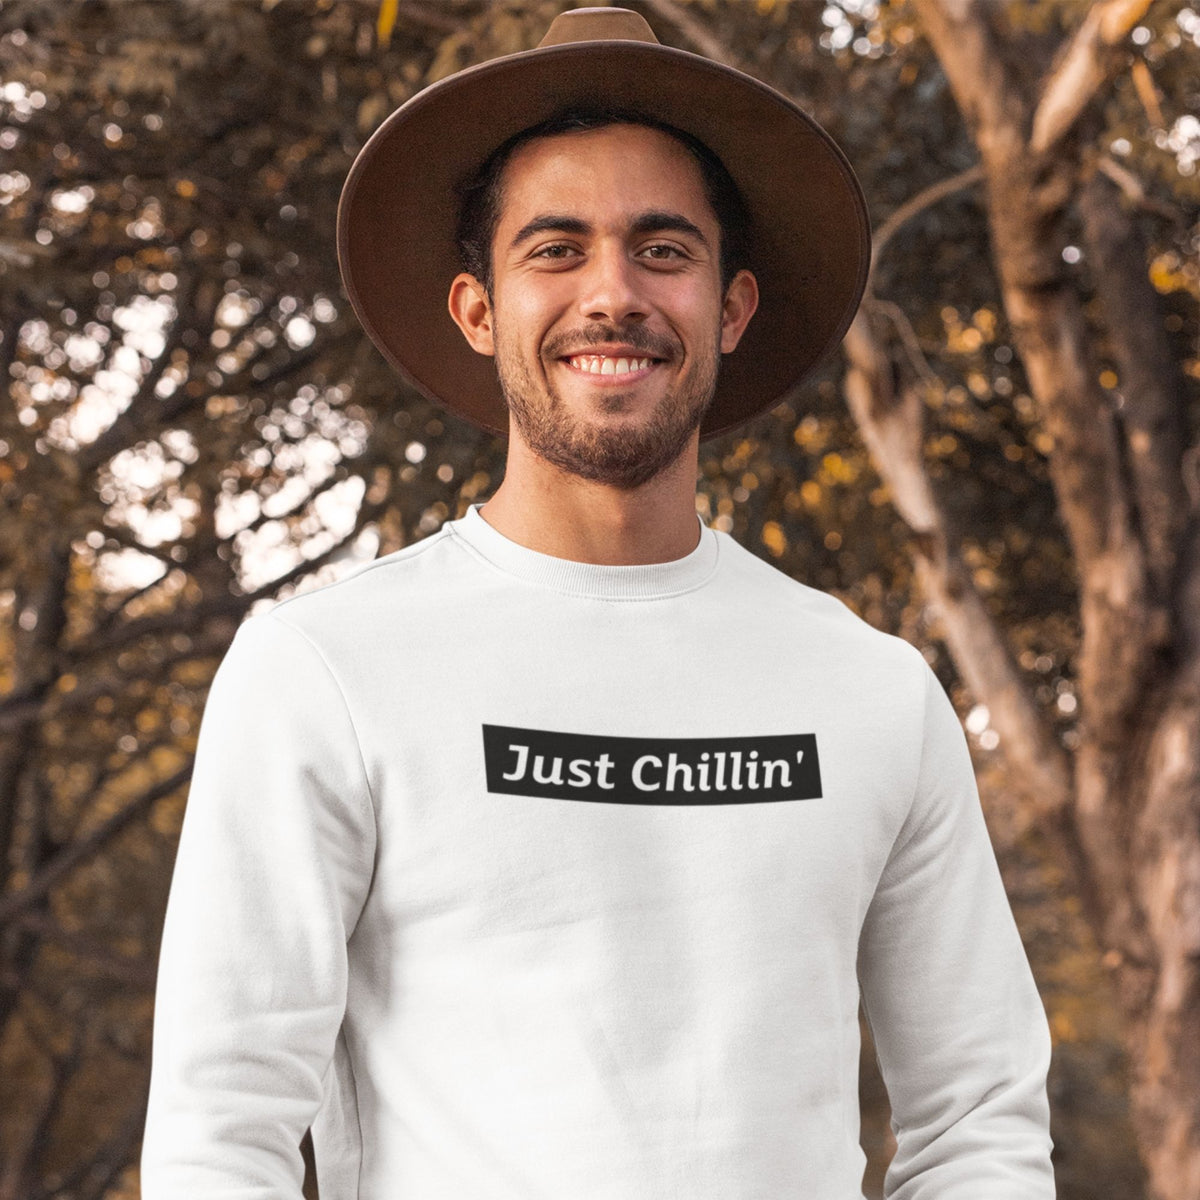 just-chillin-cotton-printed-unisex-white-men-model-sweatshirt-gogirgit-com